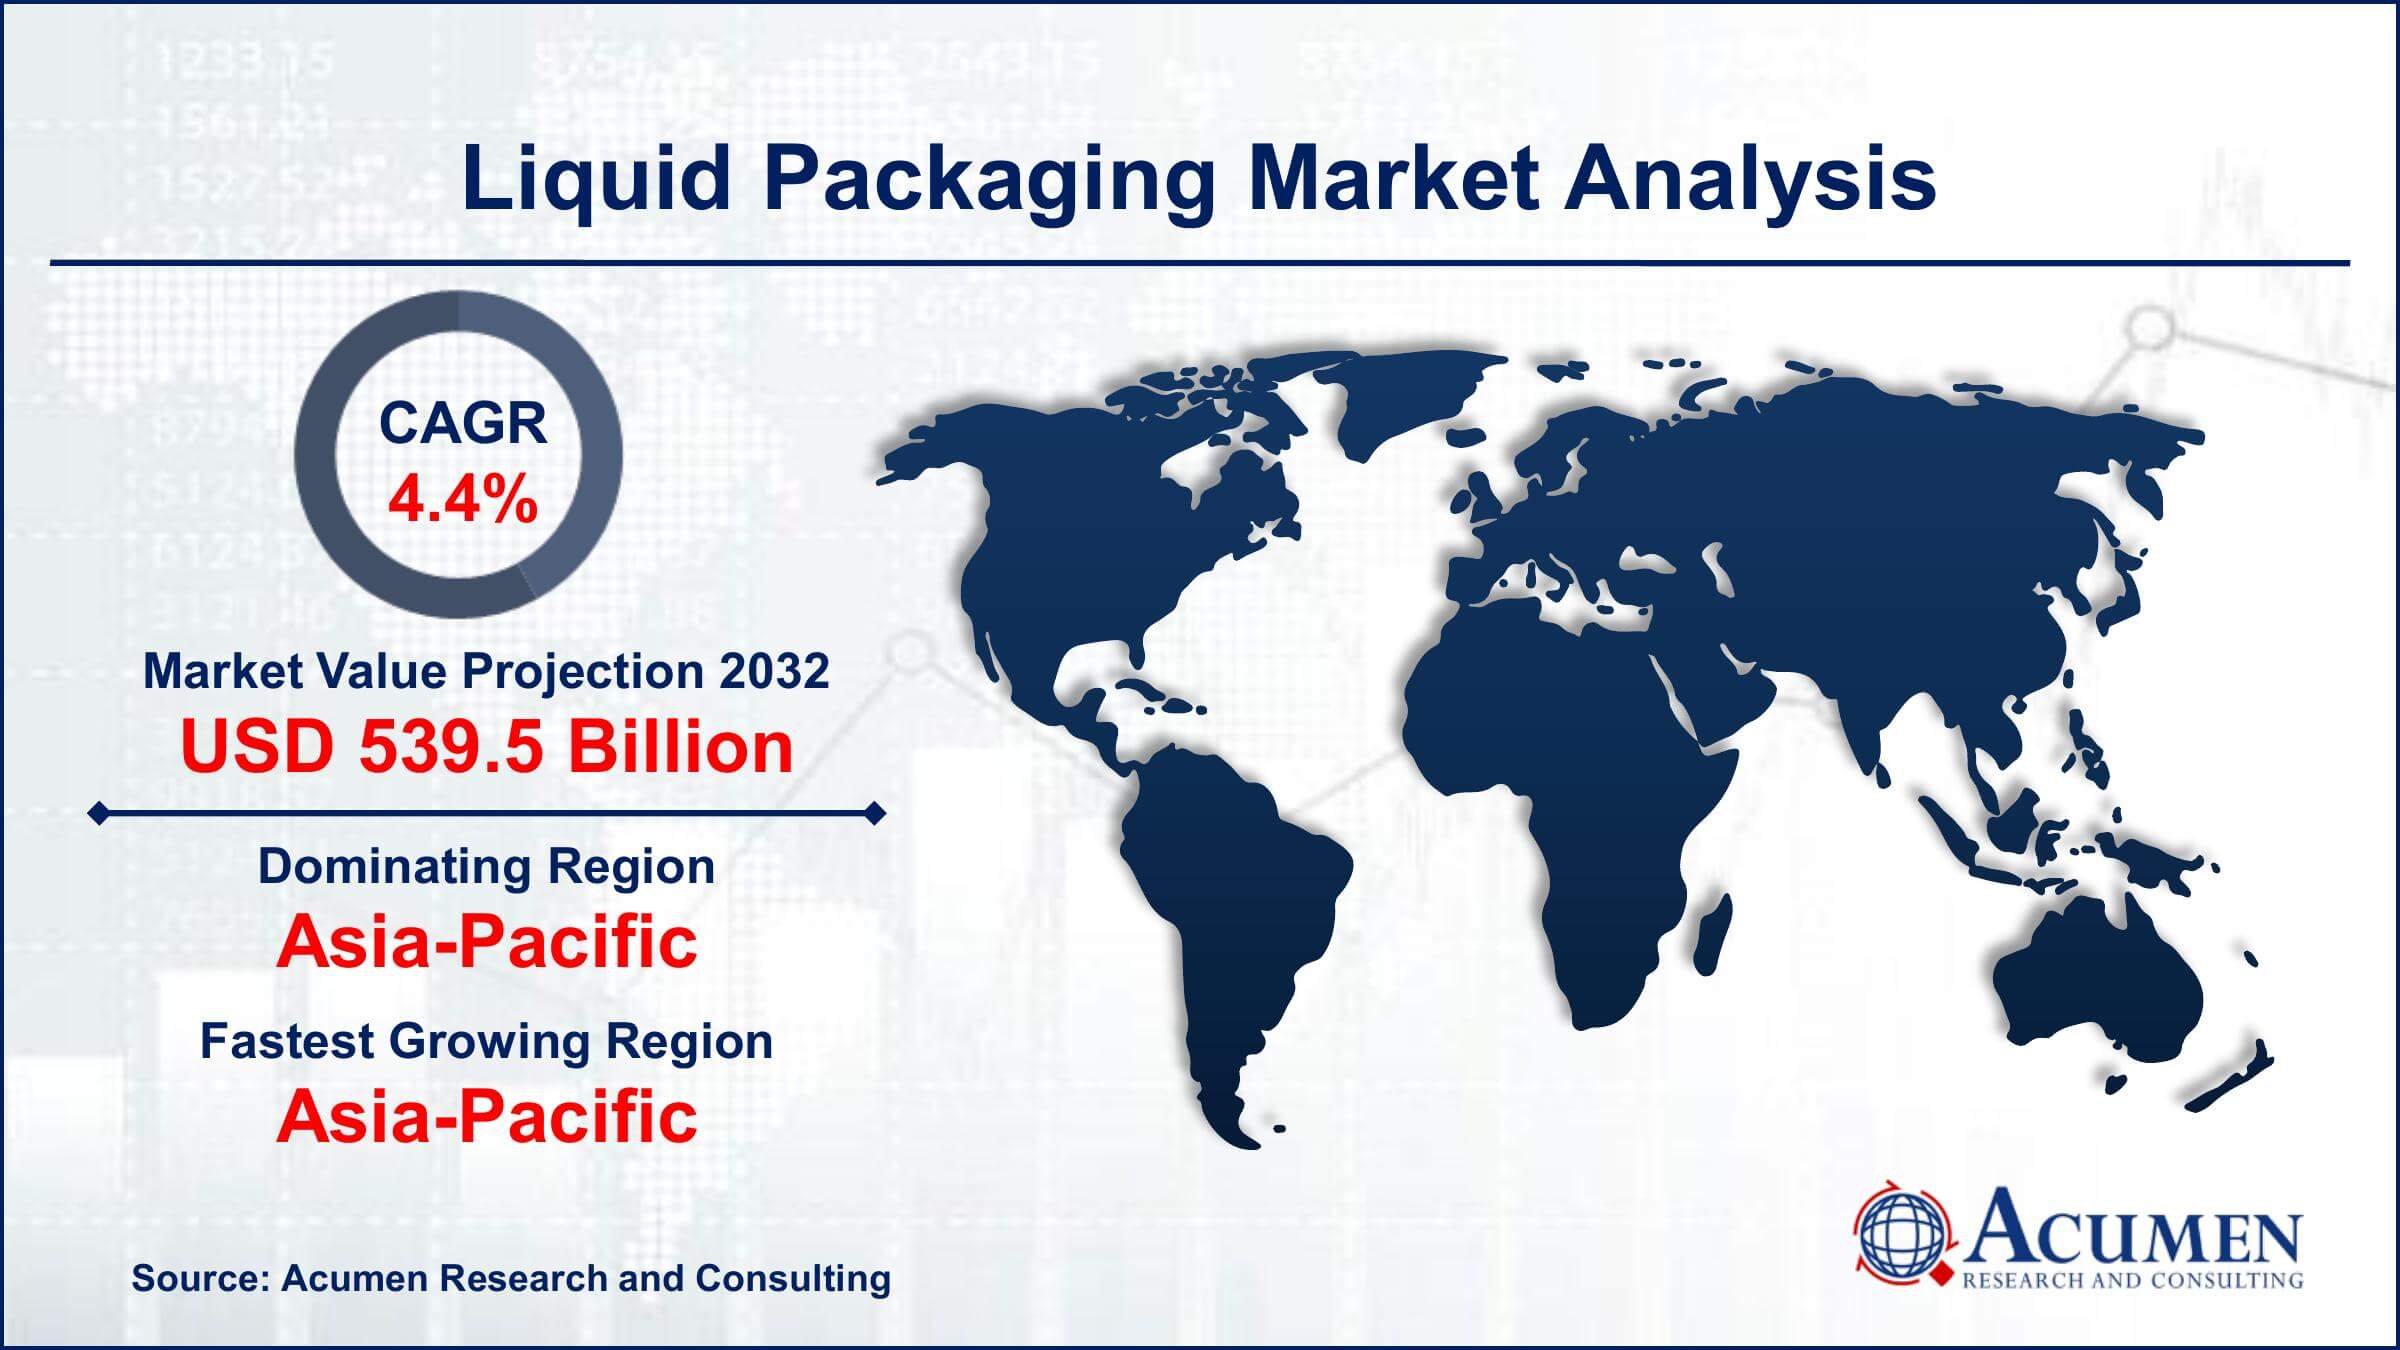 Global Liquid Packaging Market Trends